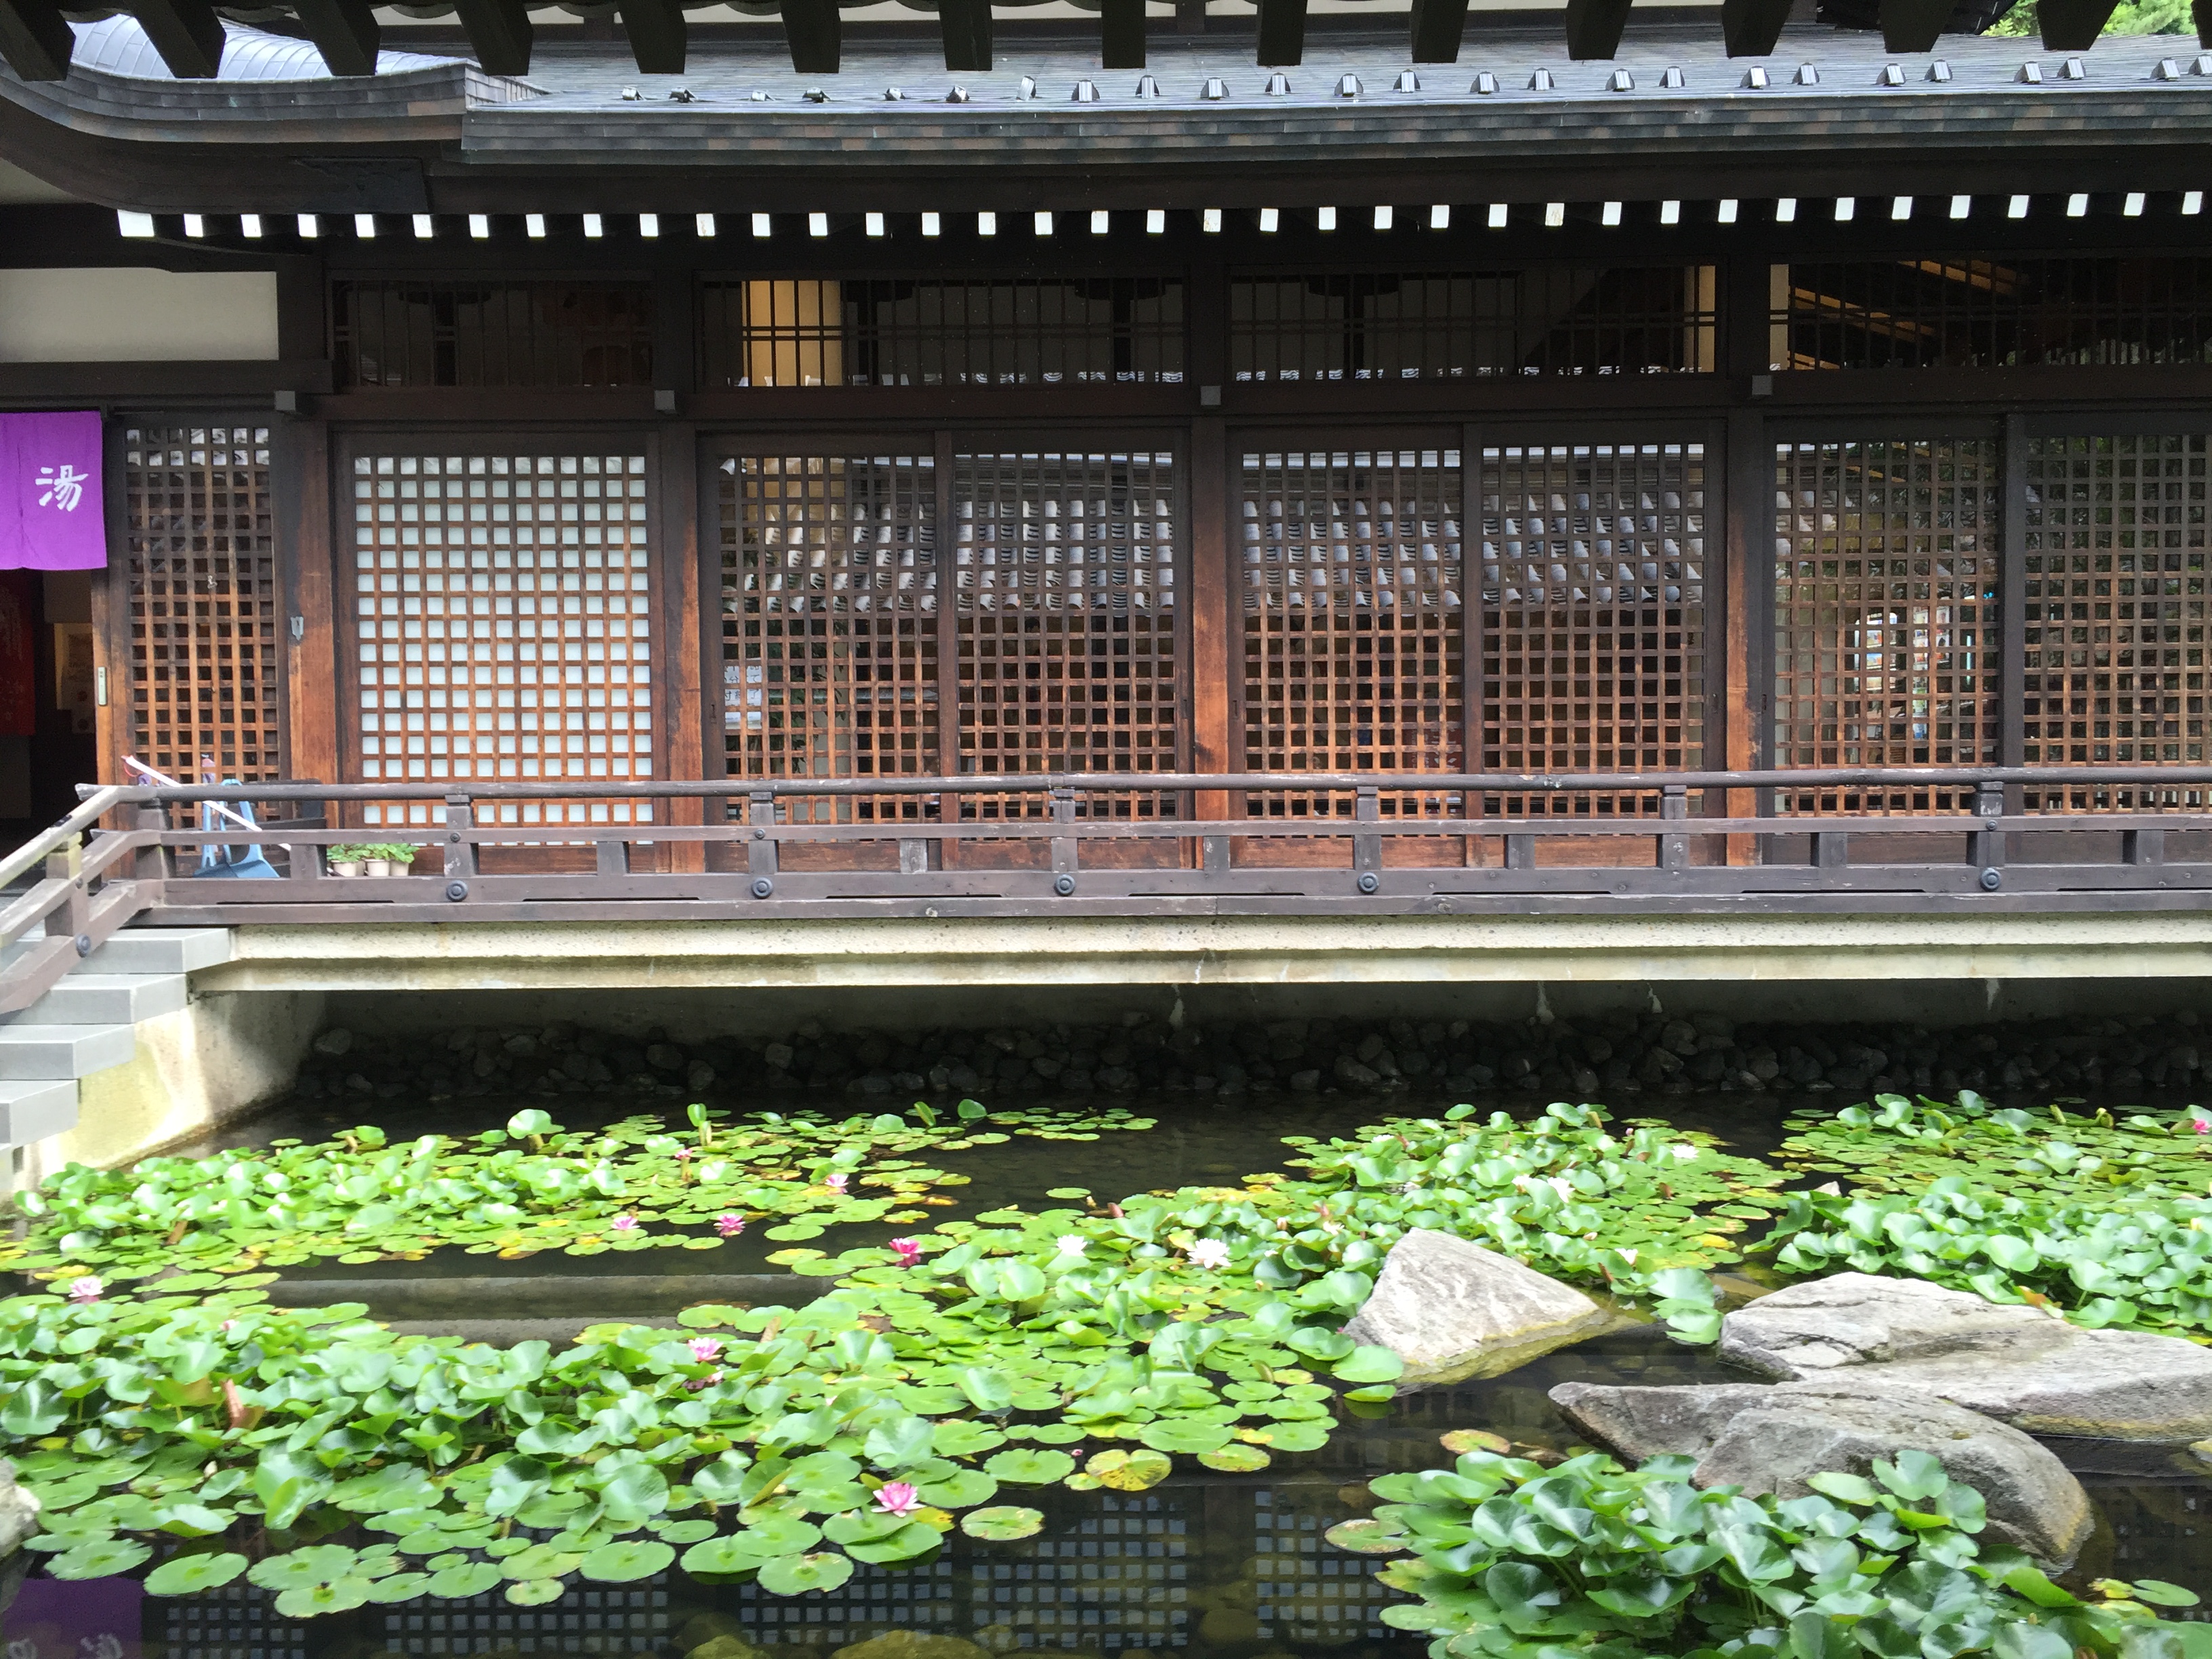 The Onsen: Navigating Japan’s Public Baths